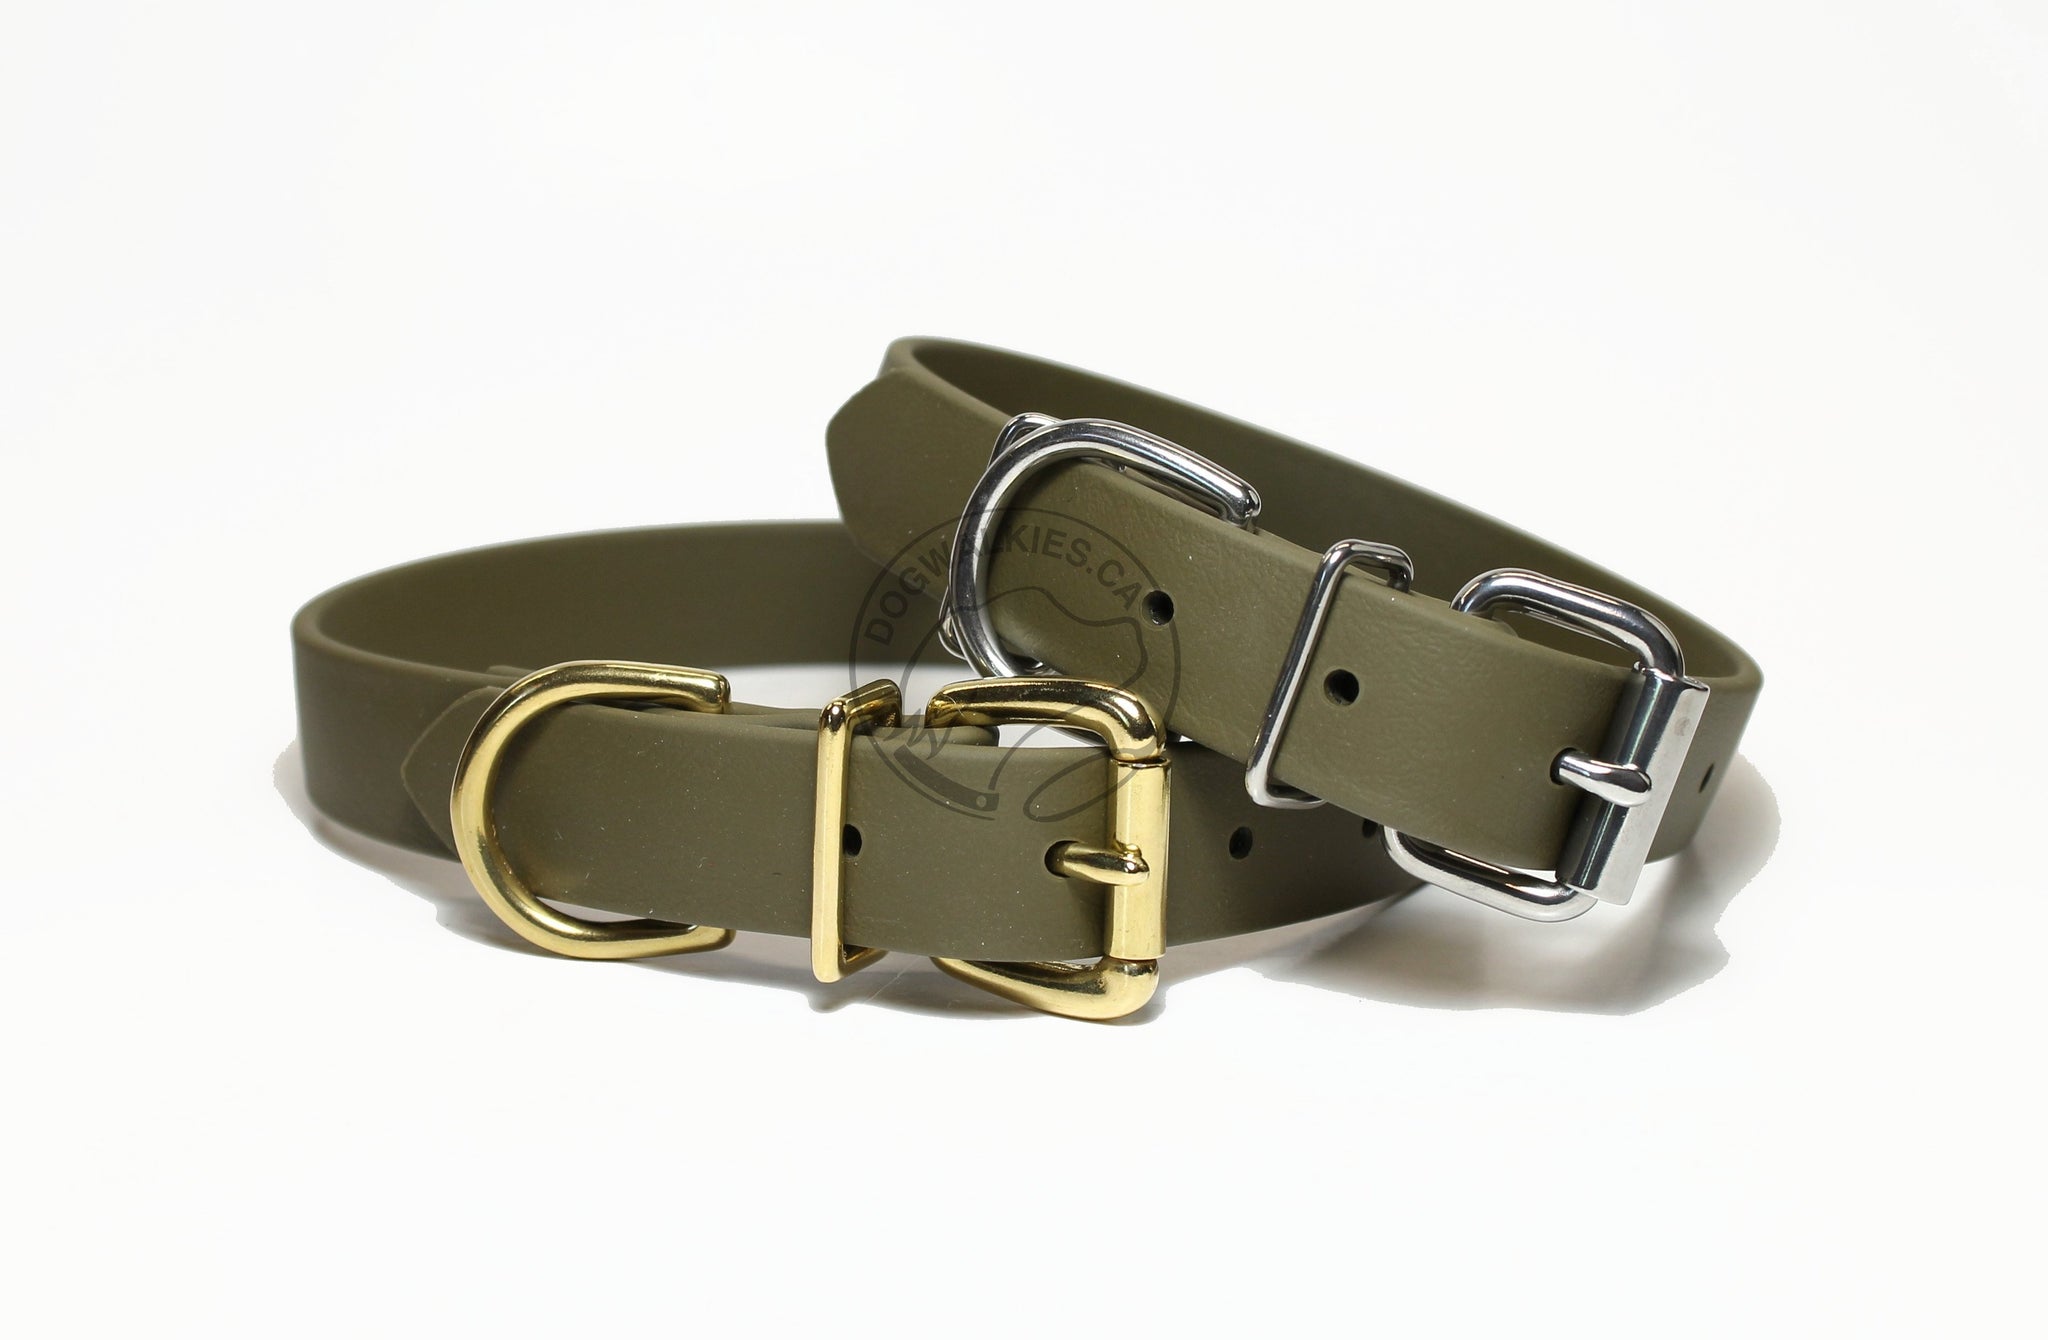 Olive Green Biothane Dog Collar - 1 inch (25mm) wide